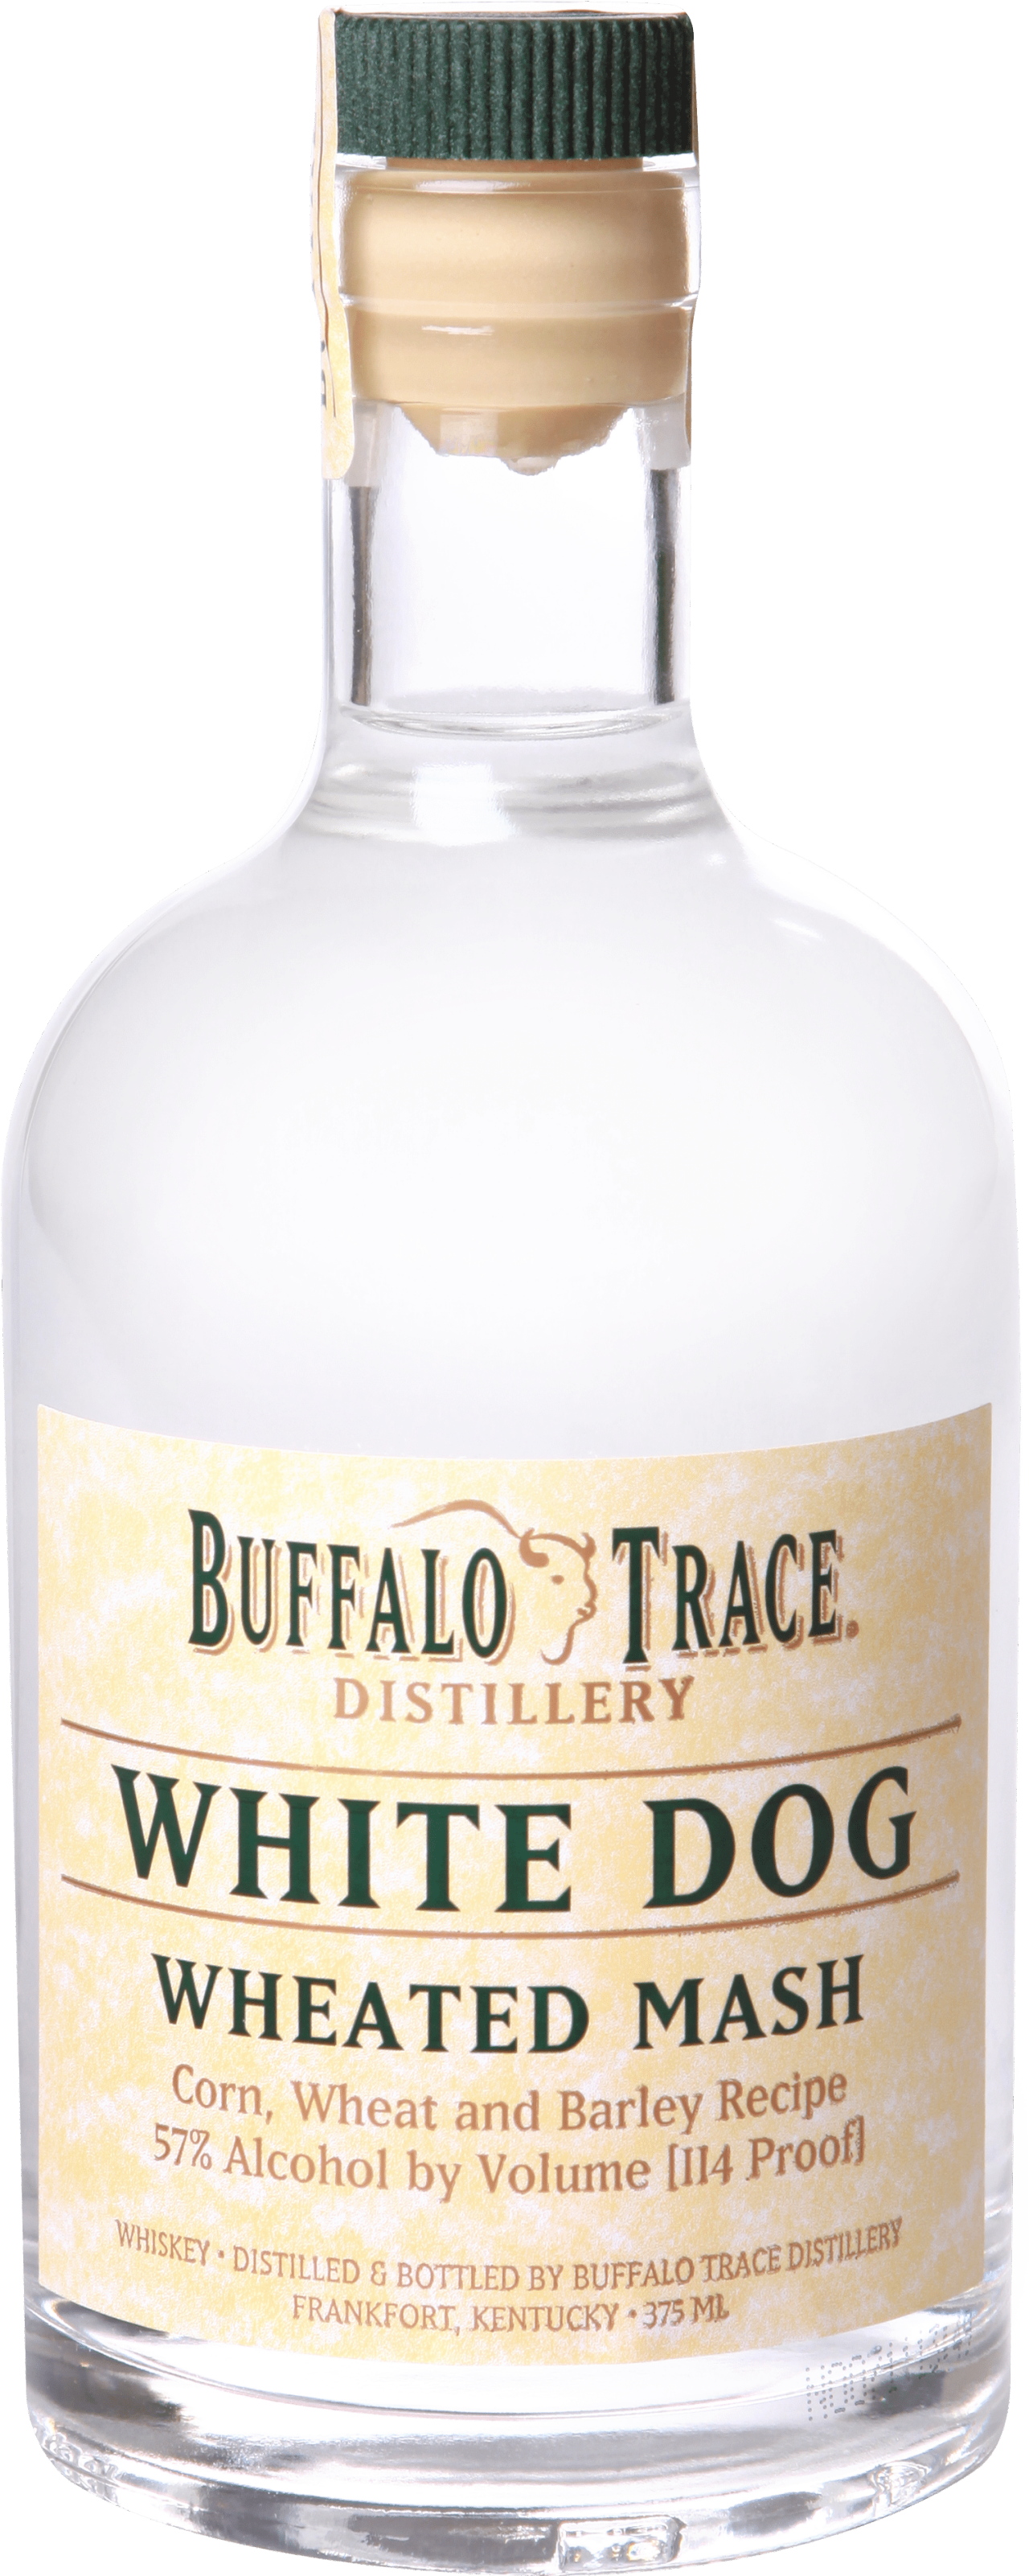 Buffalo Trace Distillery White Dog Wheated Mash bottle